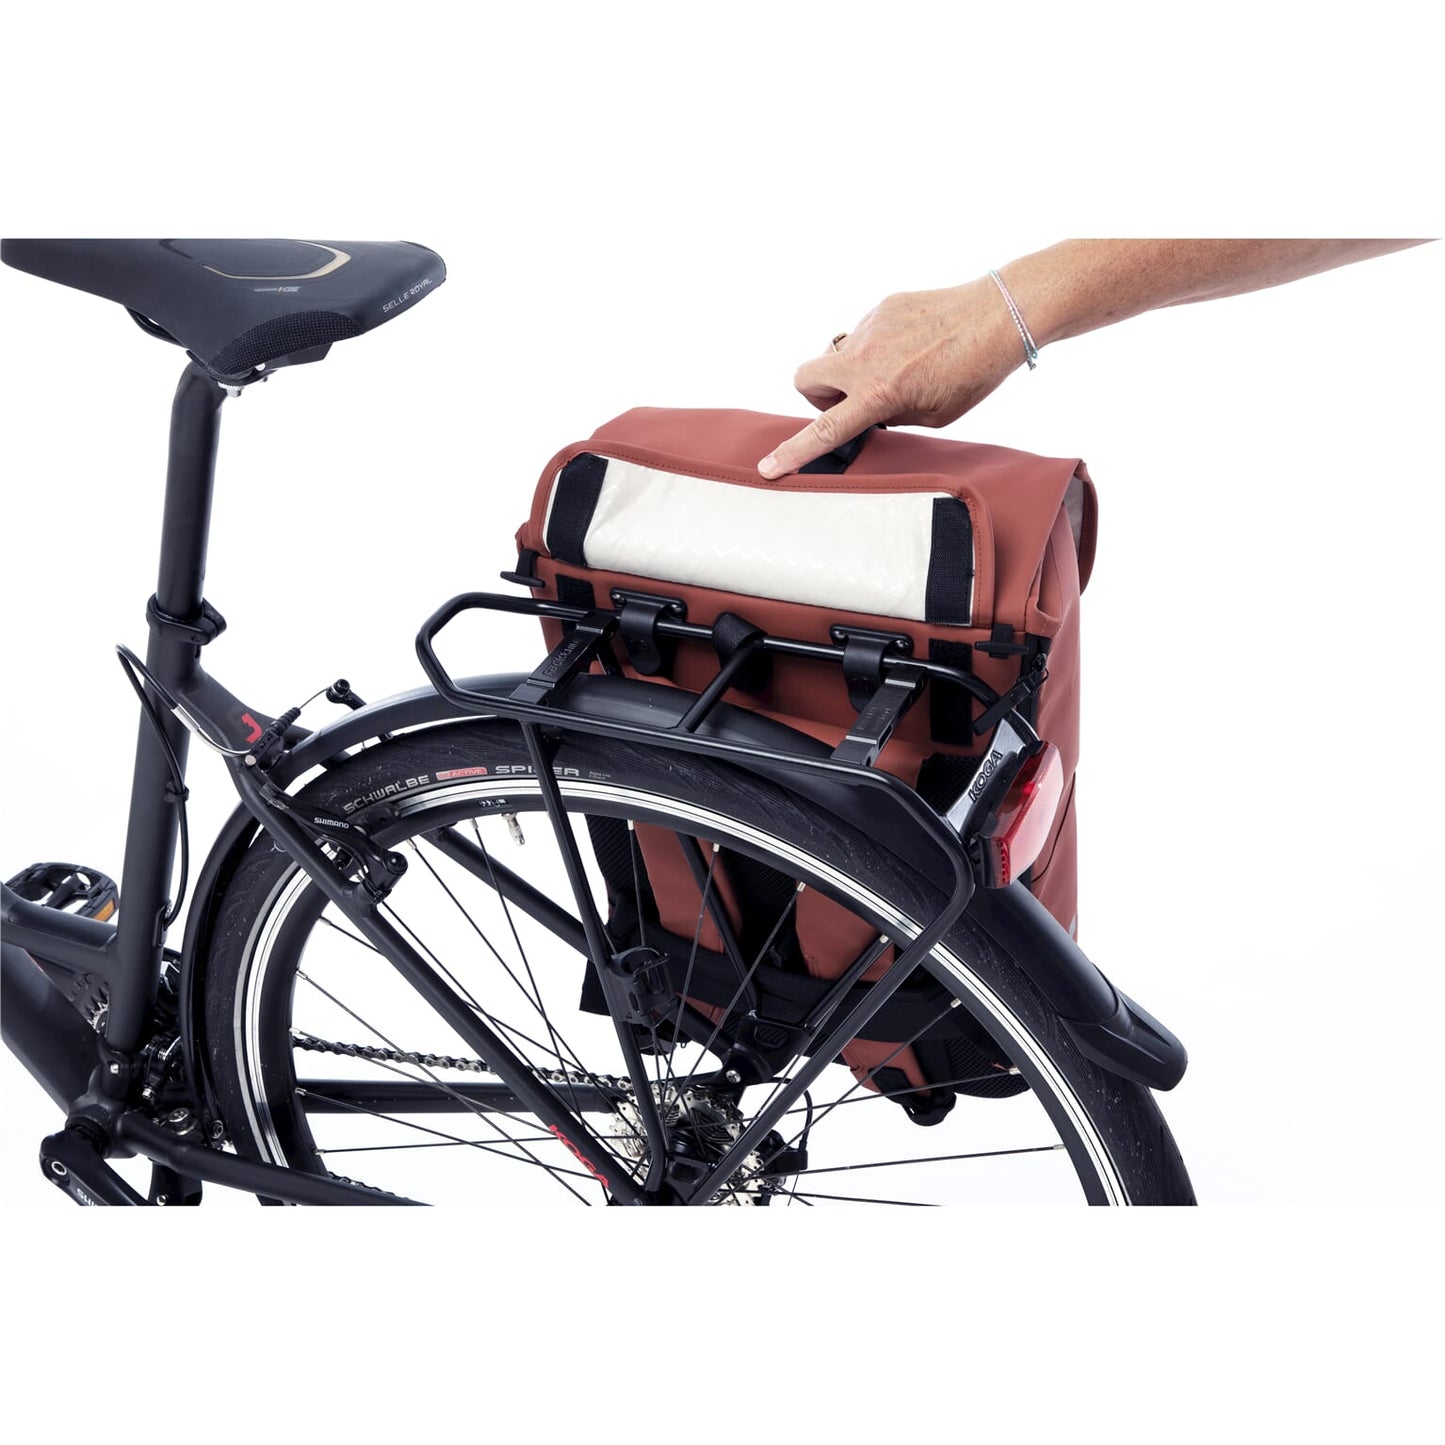 Odense mochila - mochila resistente para bicicletas - 18L - descanso